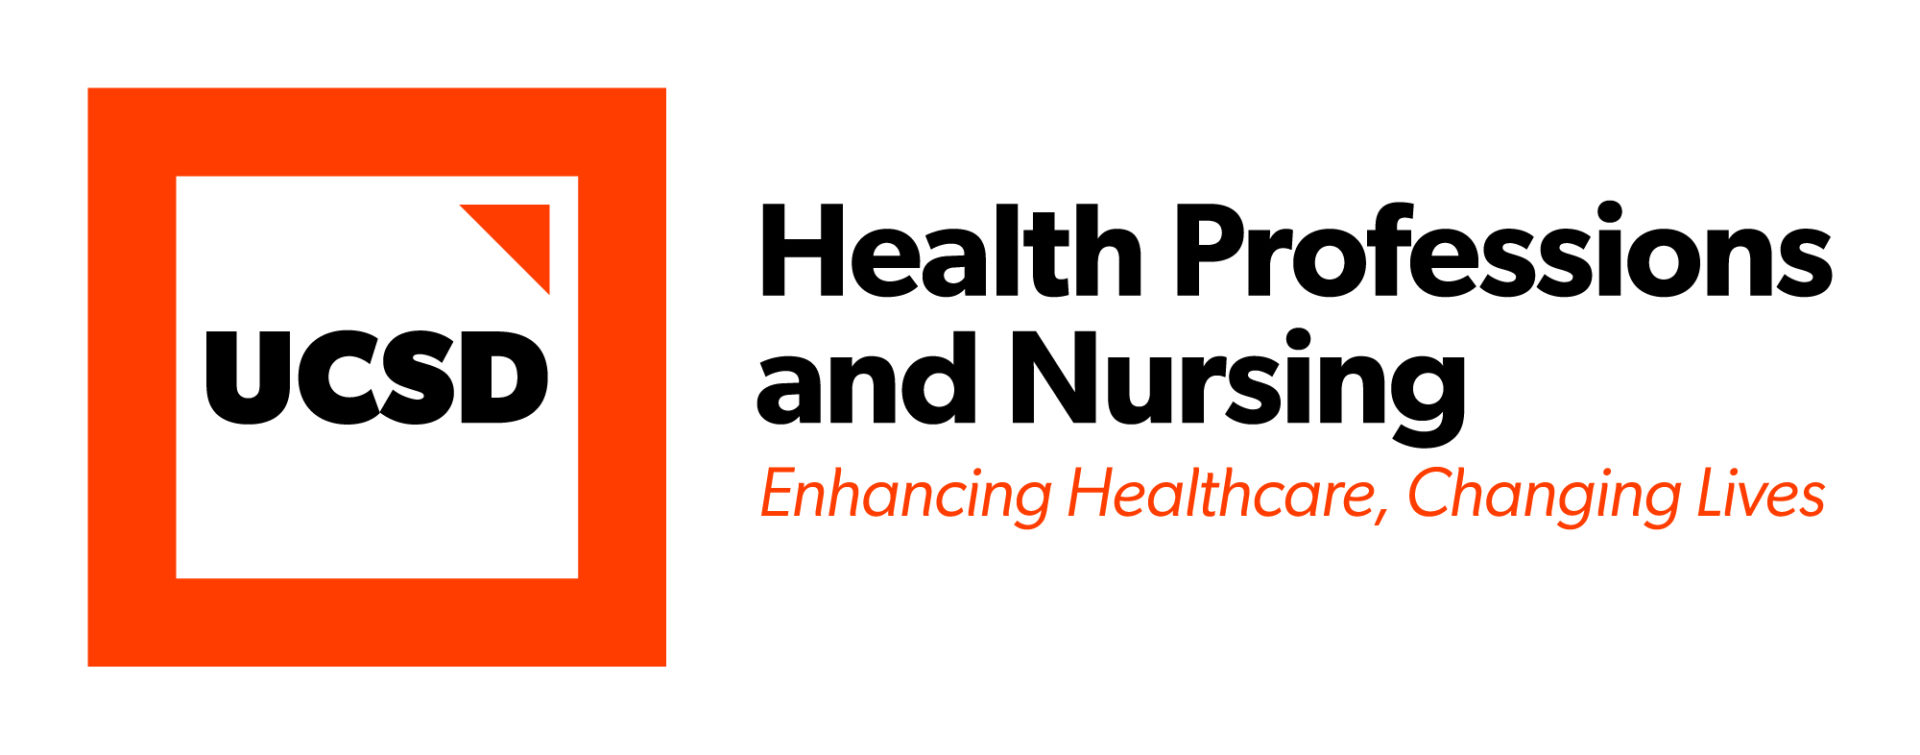 Health Professions and Nursing